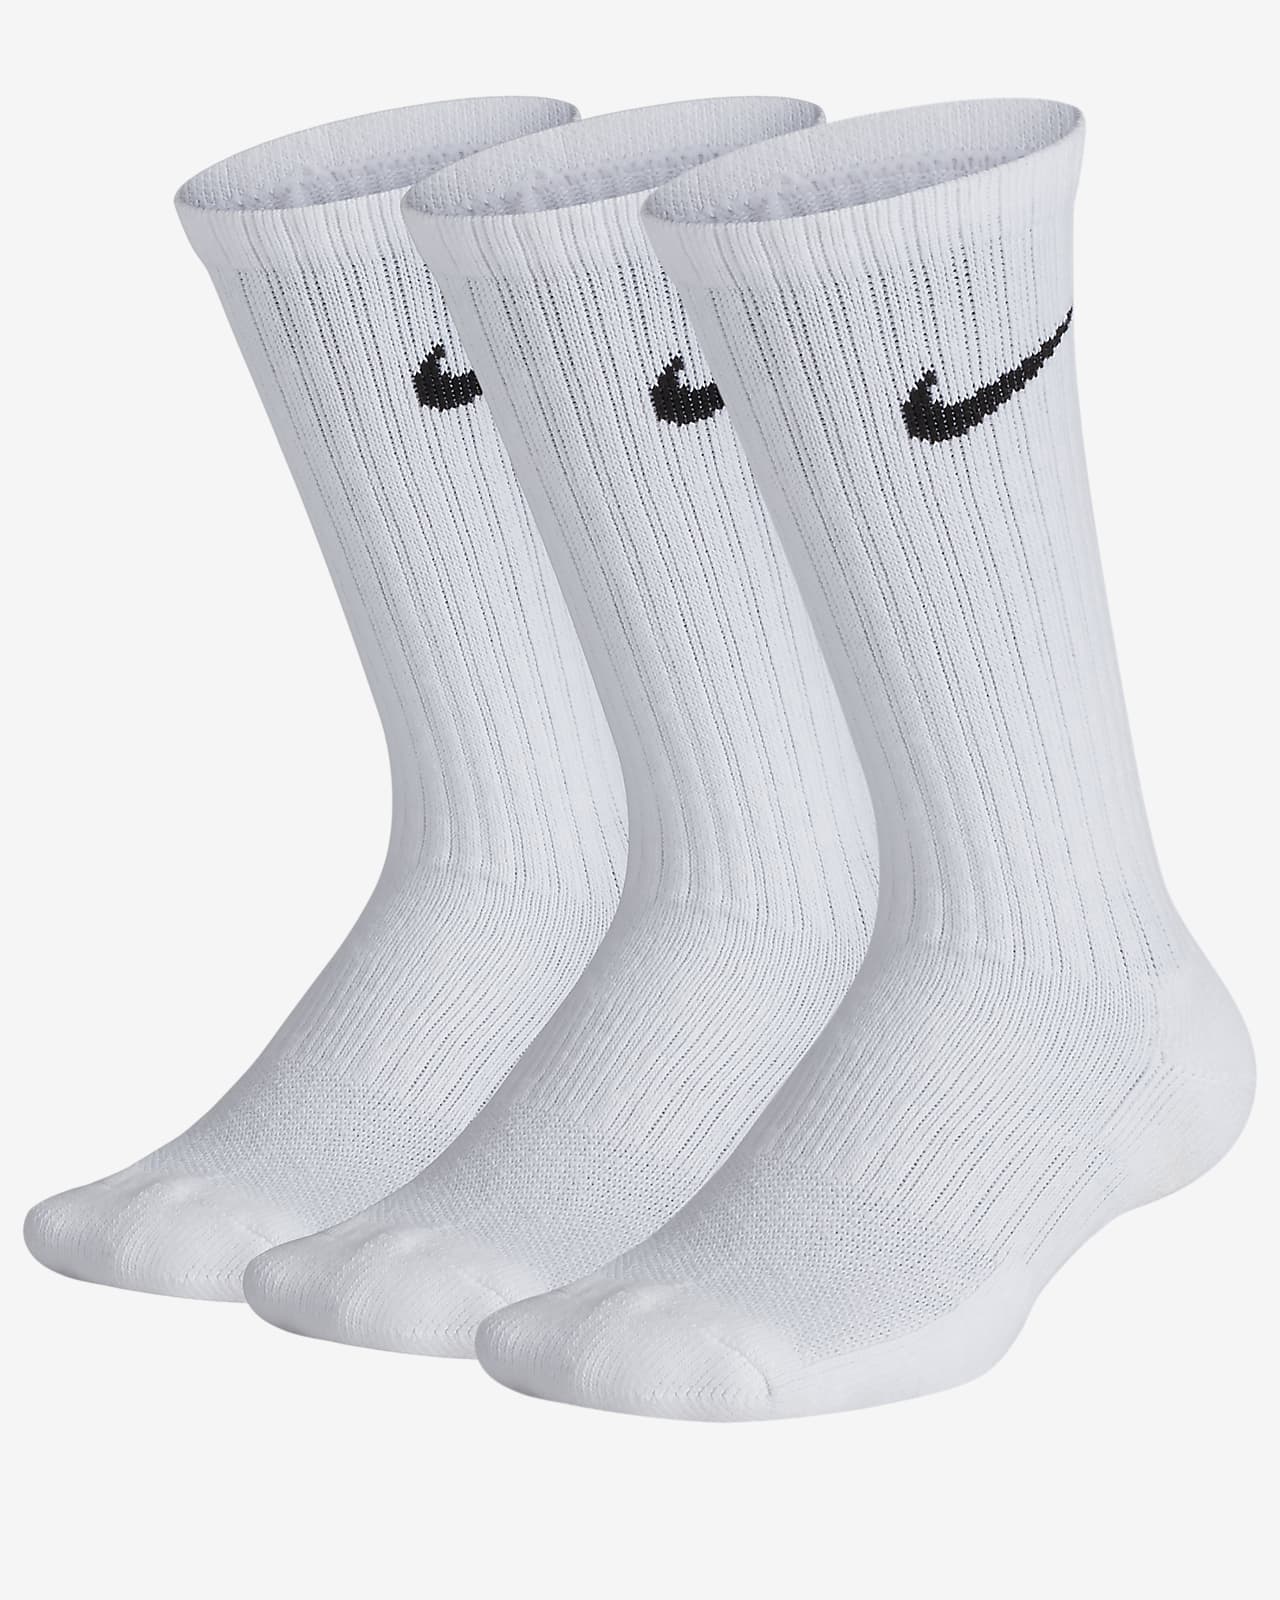 nike crew socks size small